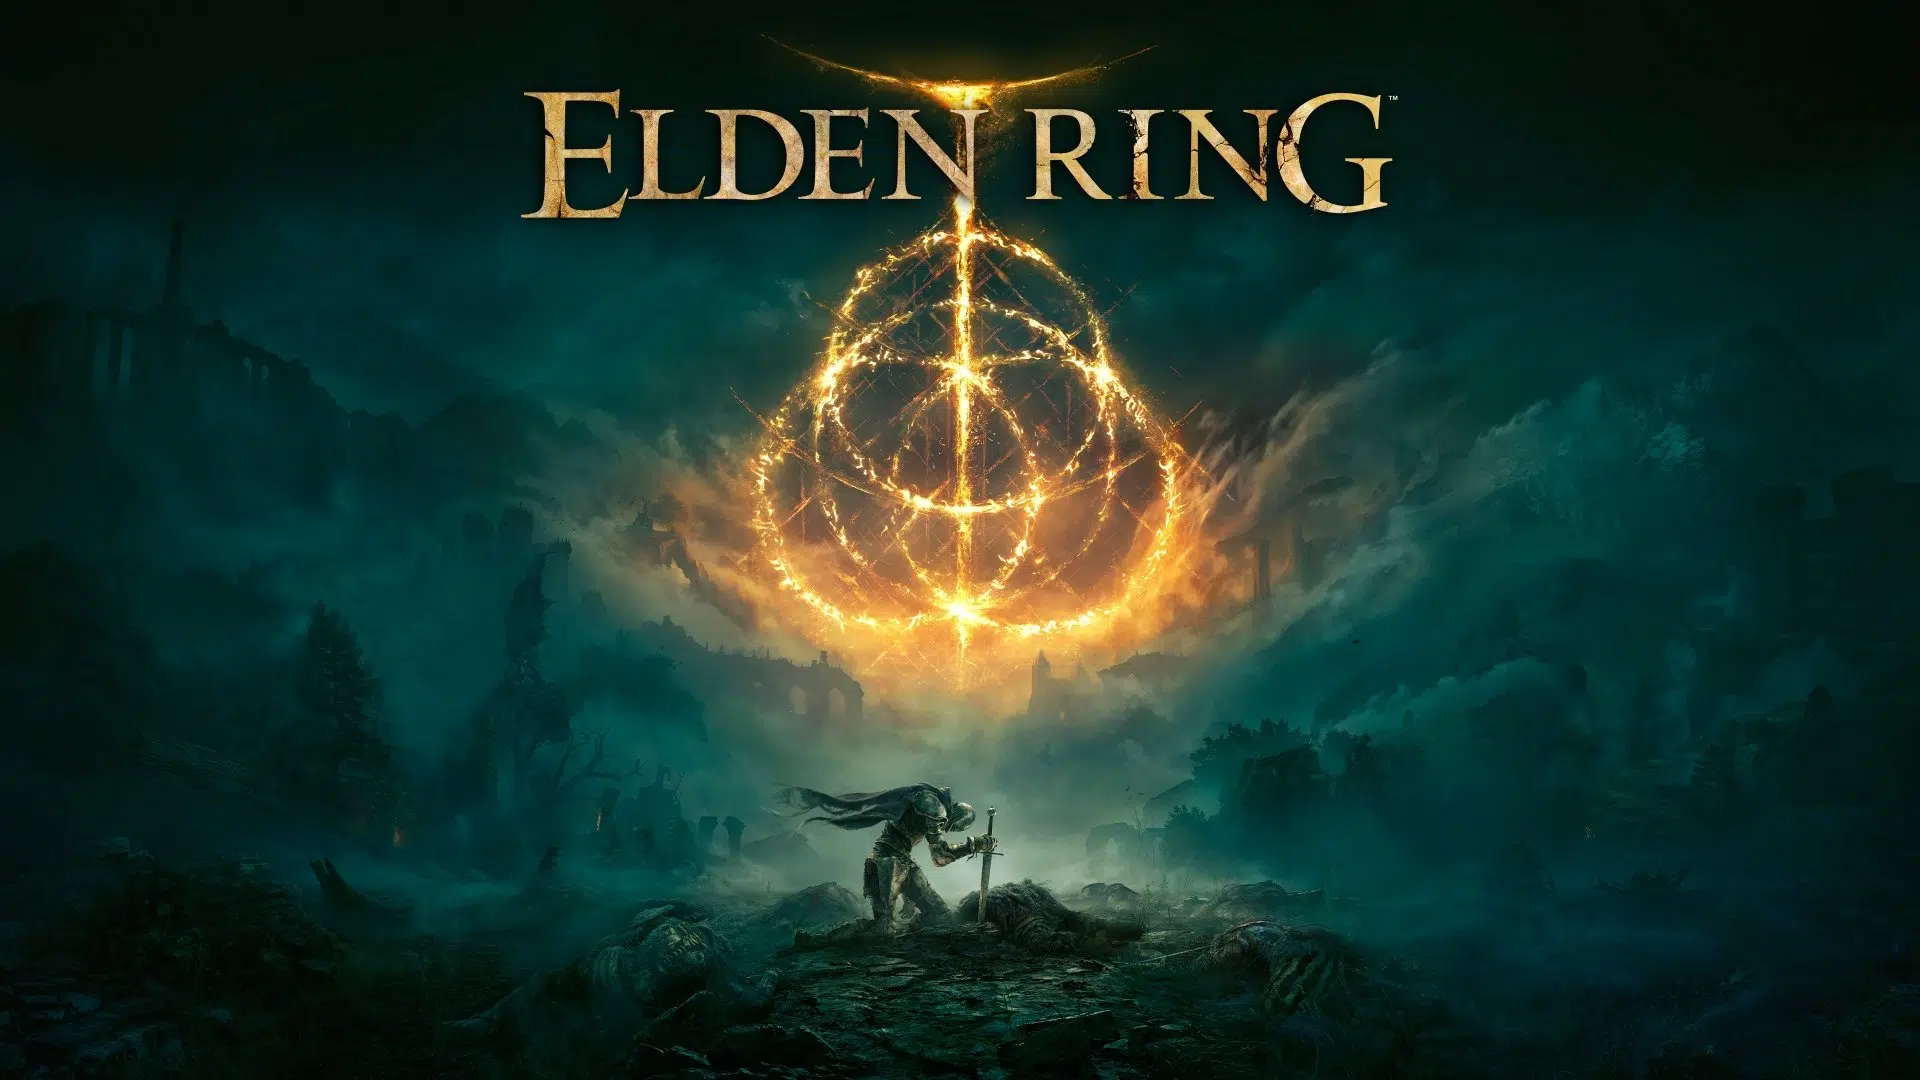 Elden Ring units sold